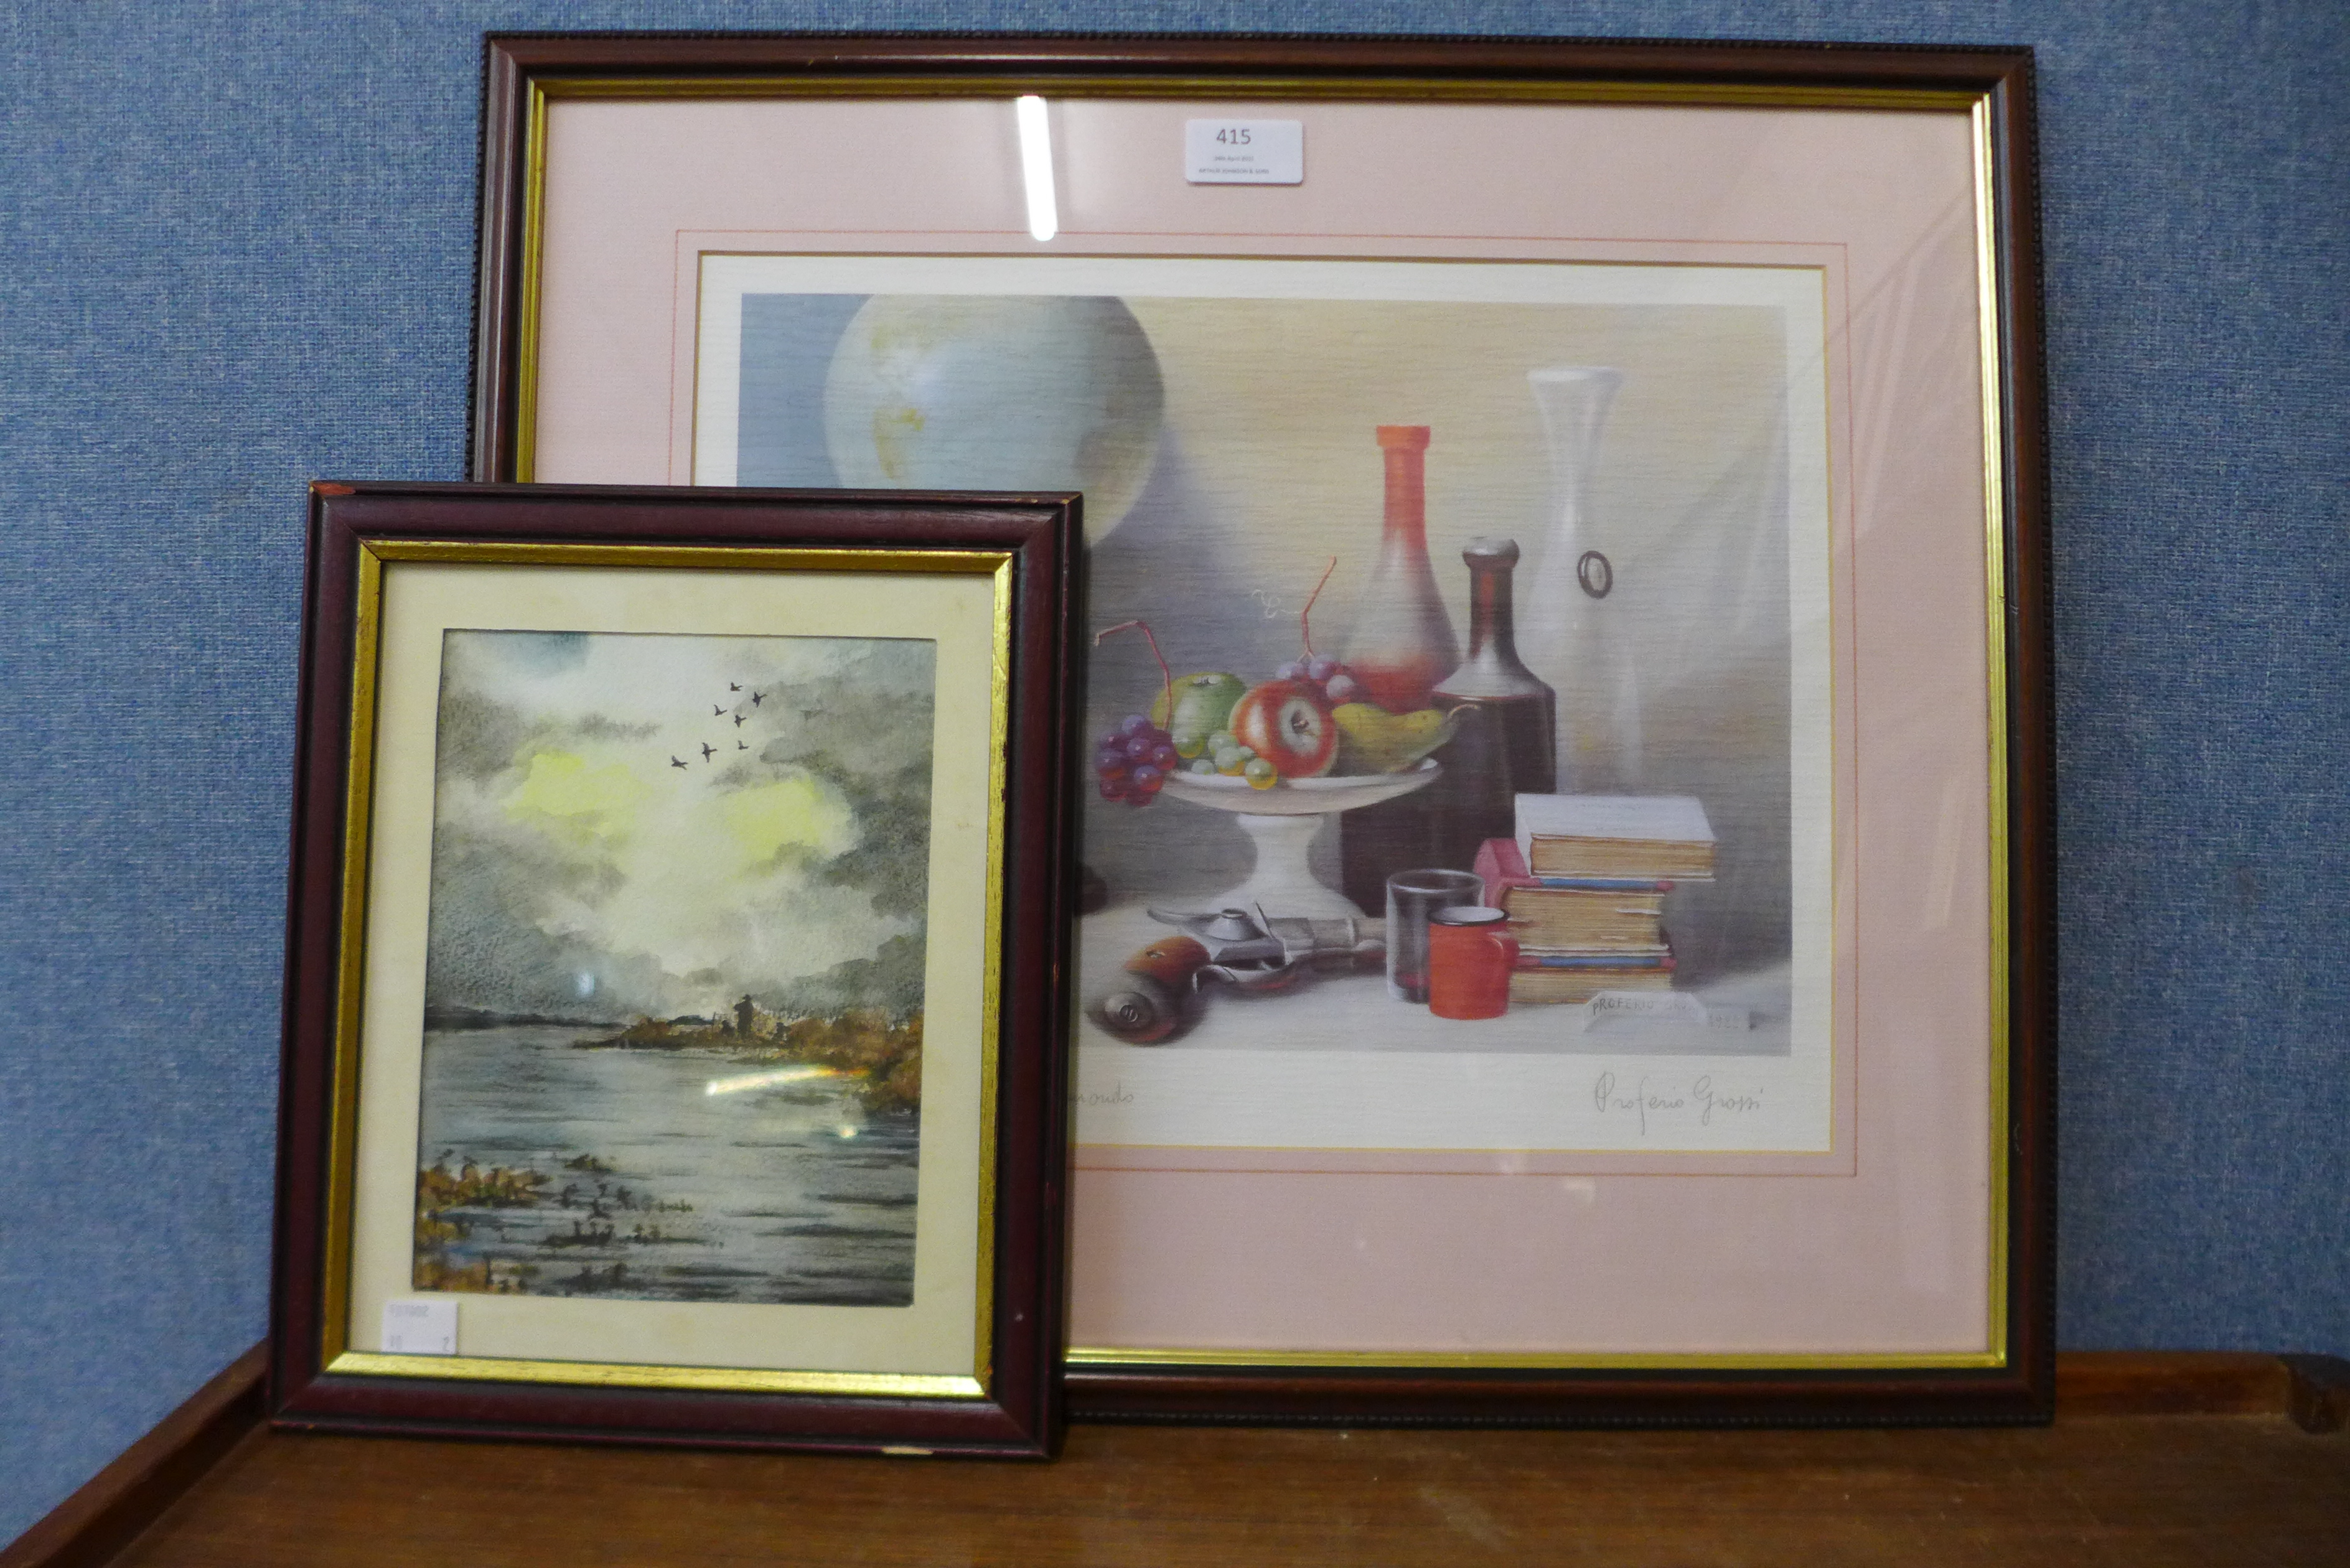 A Proferio Gross print and a small coastal scene watercolour, framed